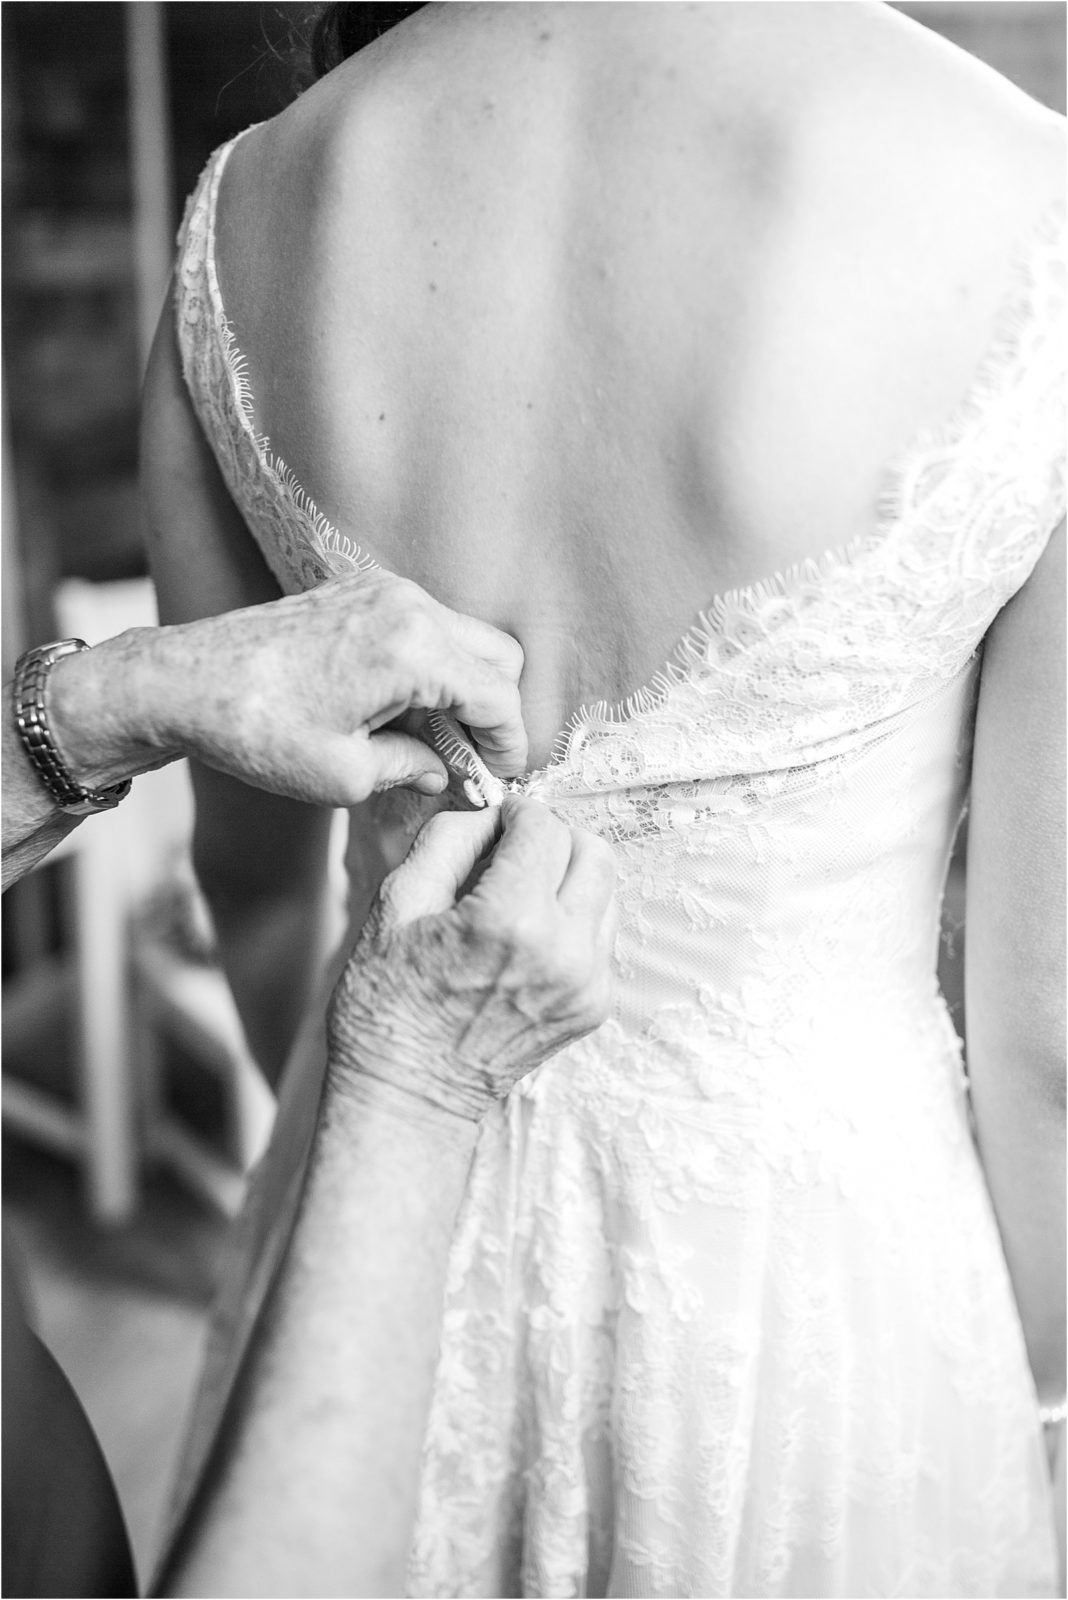 Woman putting on wedding dress